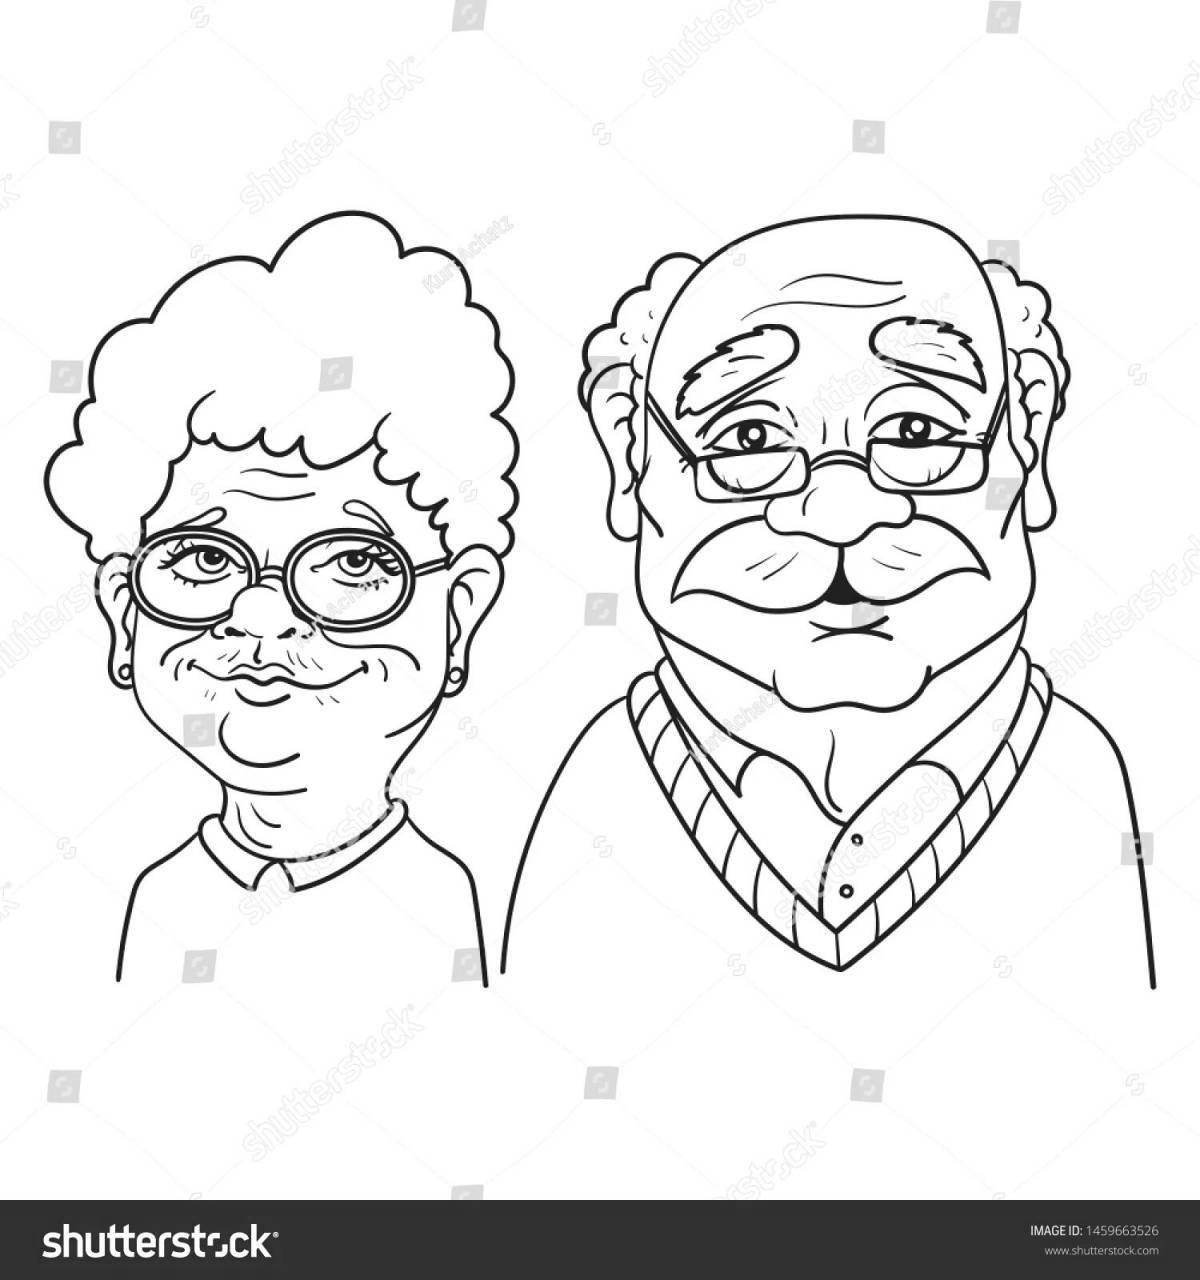 Adorable grandparents coloring page